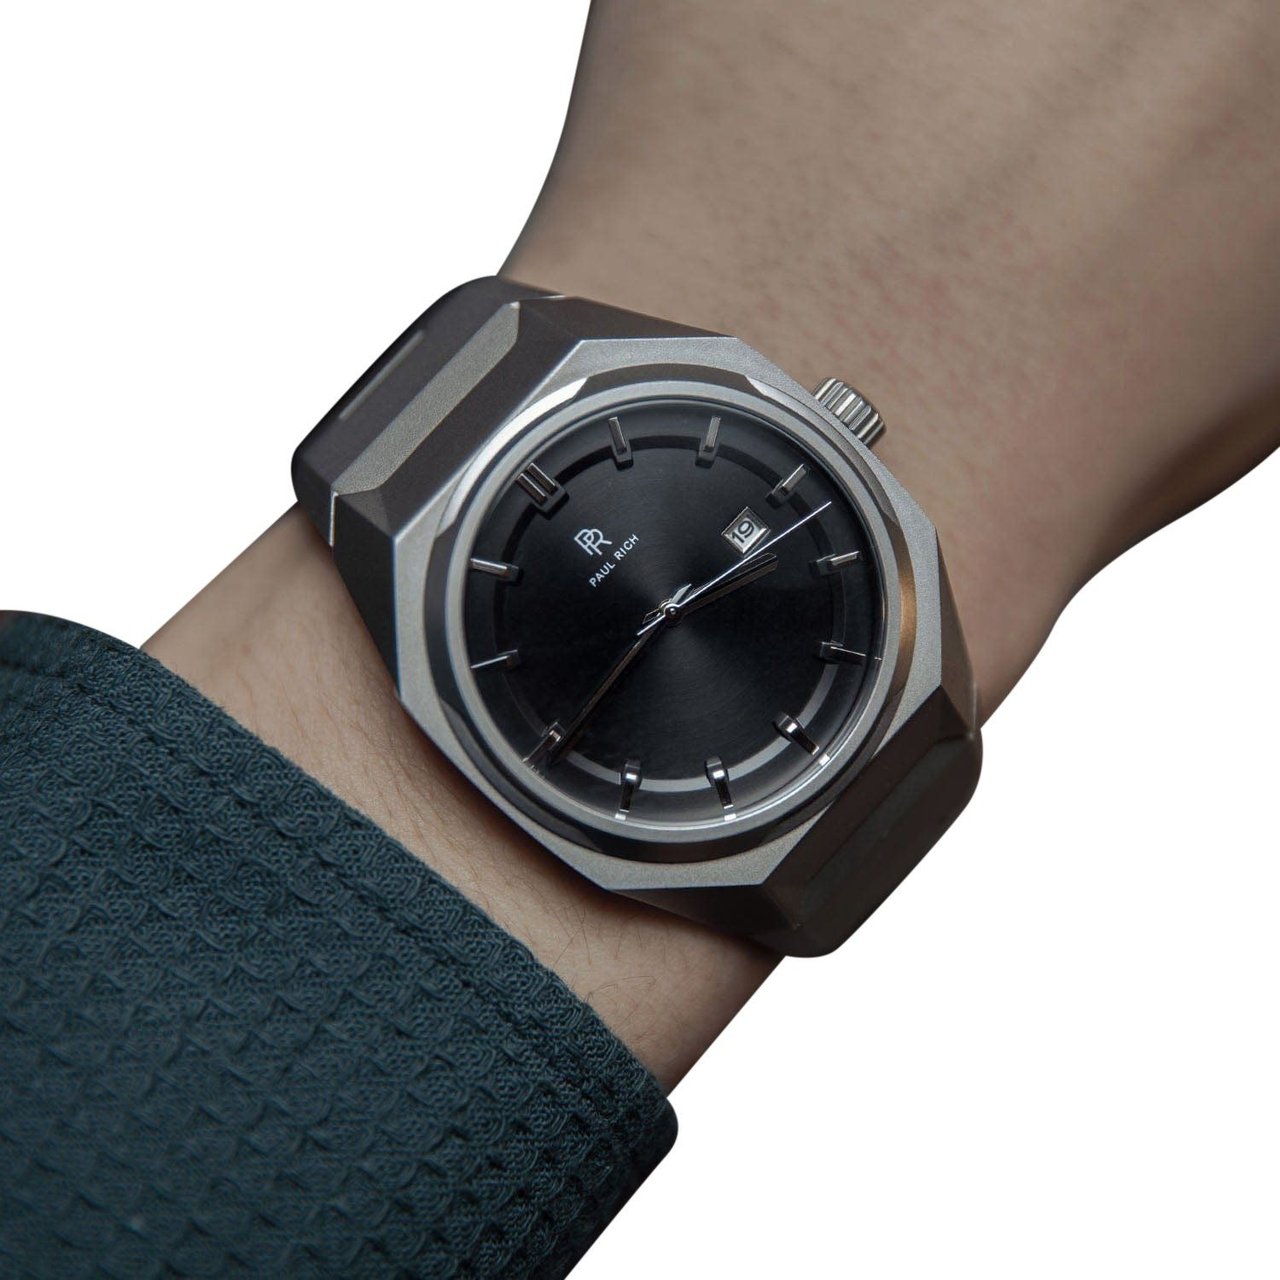 Paul Rich Elements Black Blizzard Rubber ELE05R-A automatisch horloge Zwart